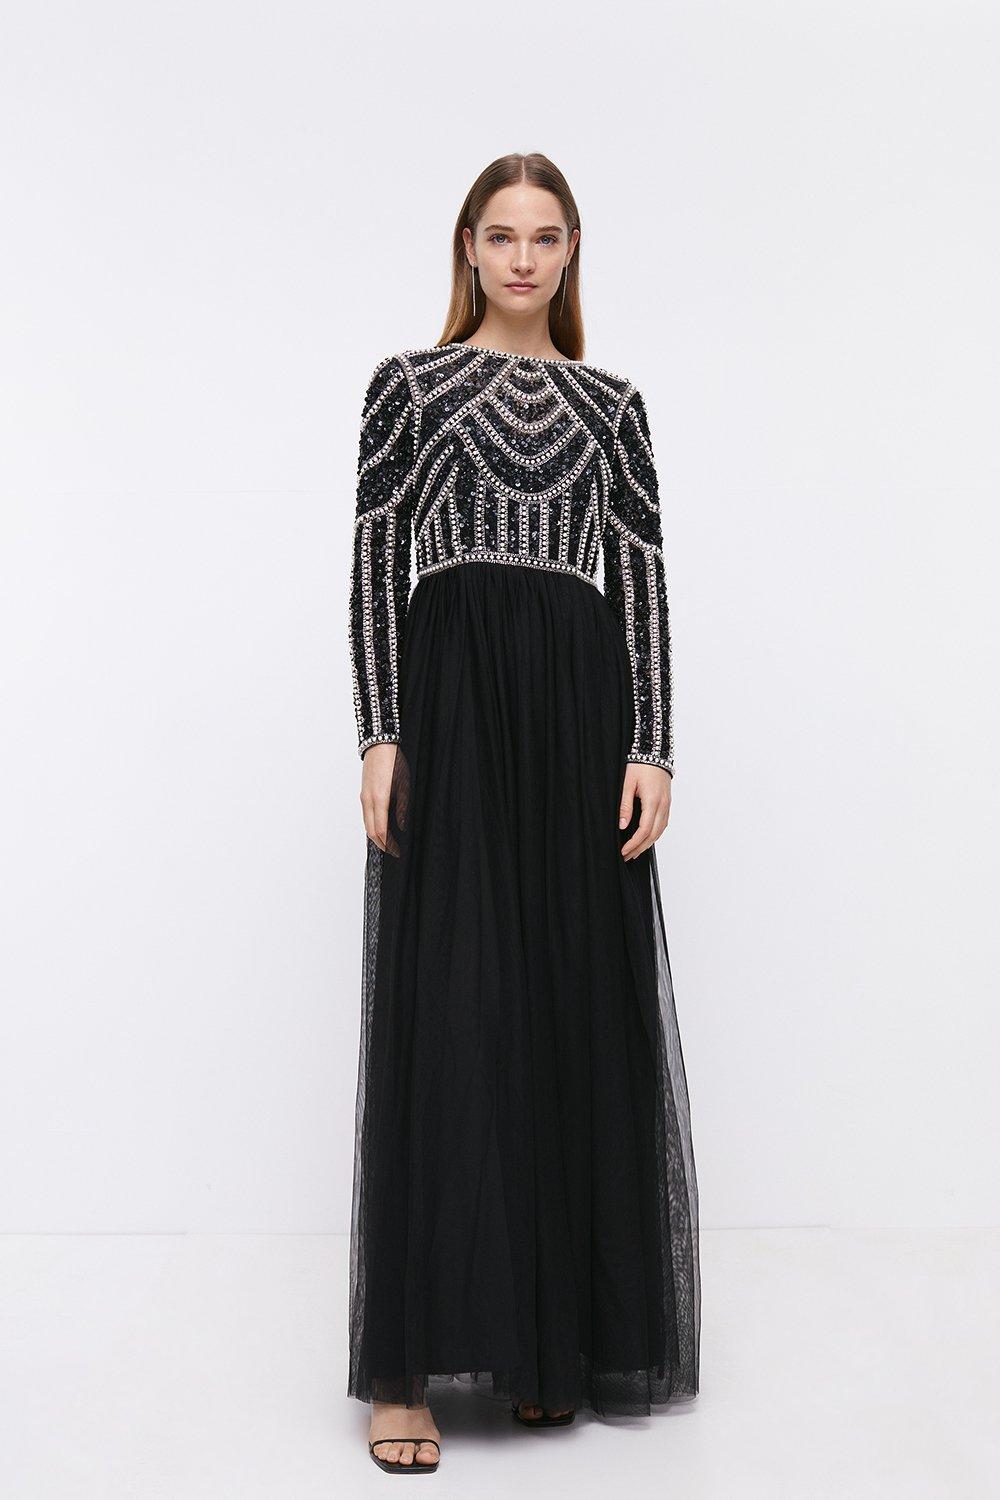 Pearl Embellished Bodice Tulle Skirt Dress - Black